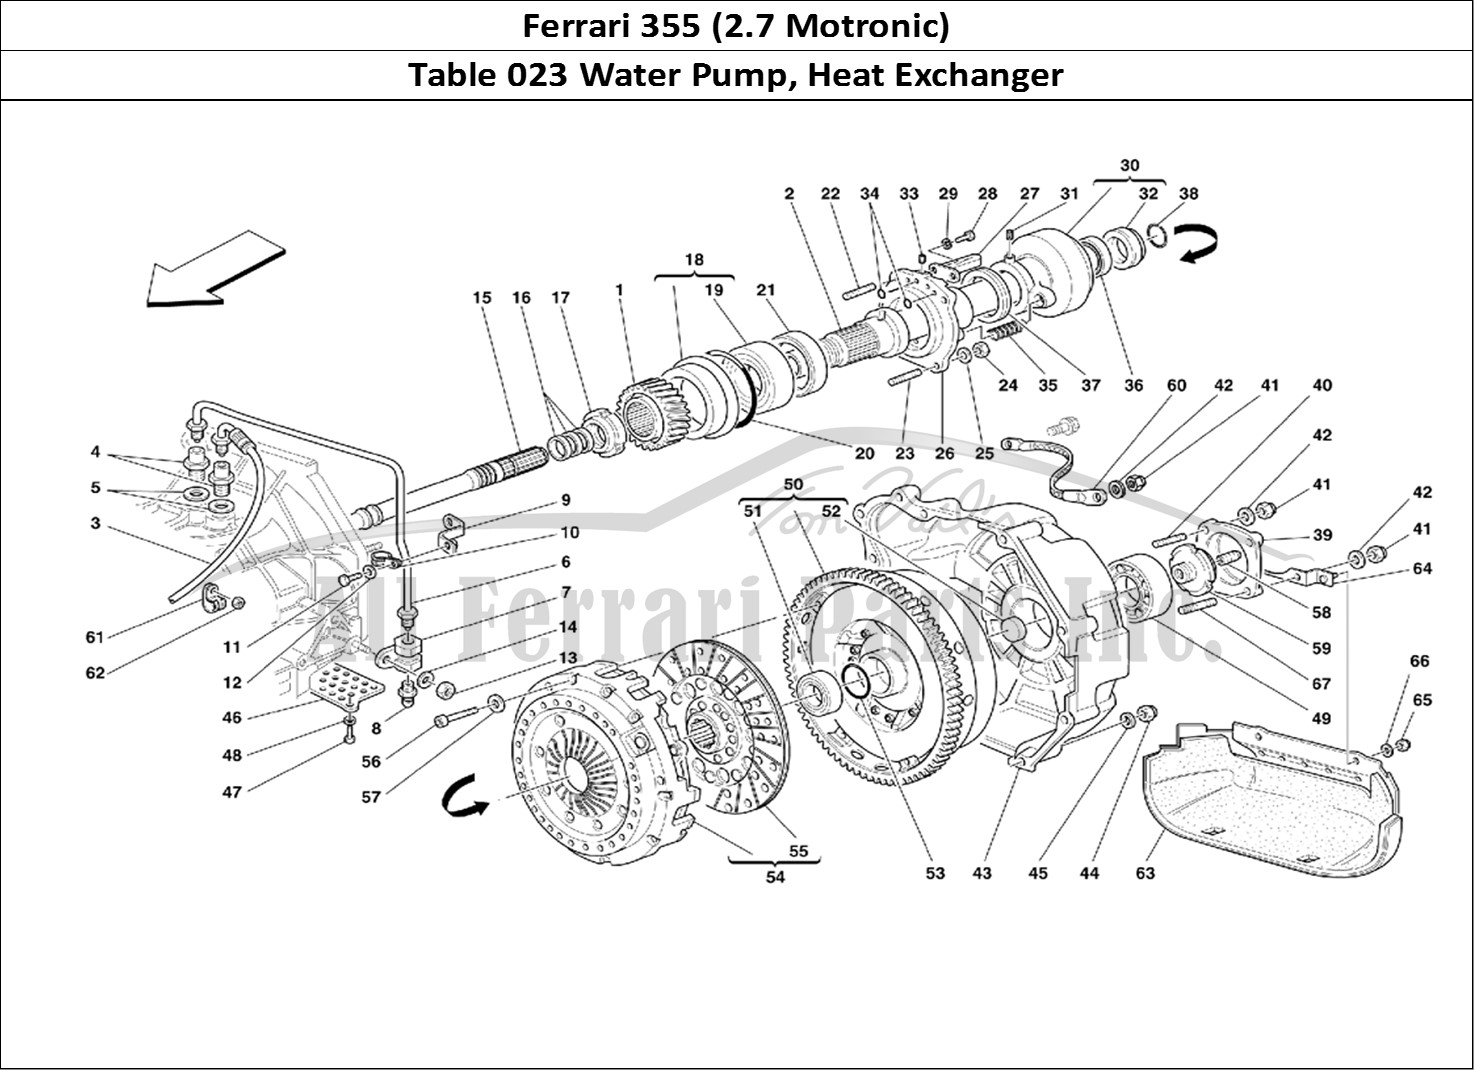 Ferrari Parts Ferrari 355 (2.7 Motronic) Page 023 Water Pump and Oil/Water